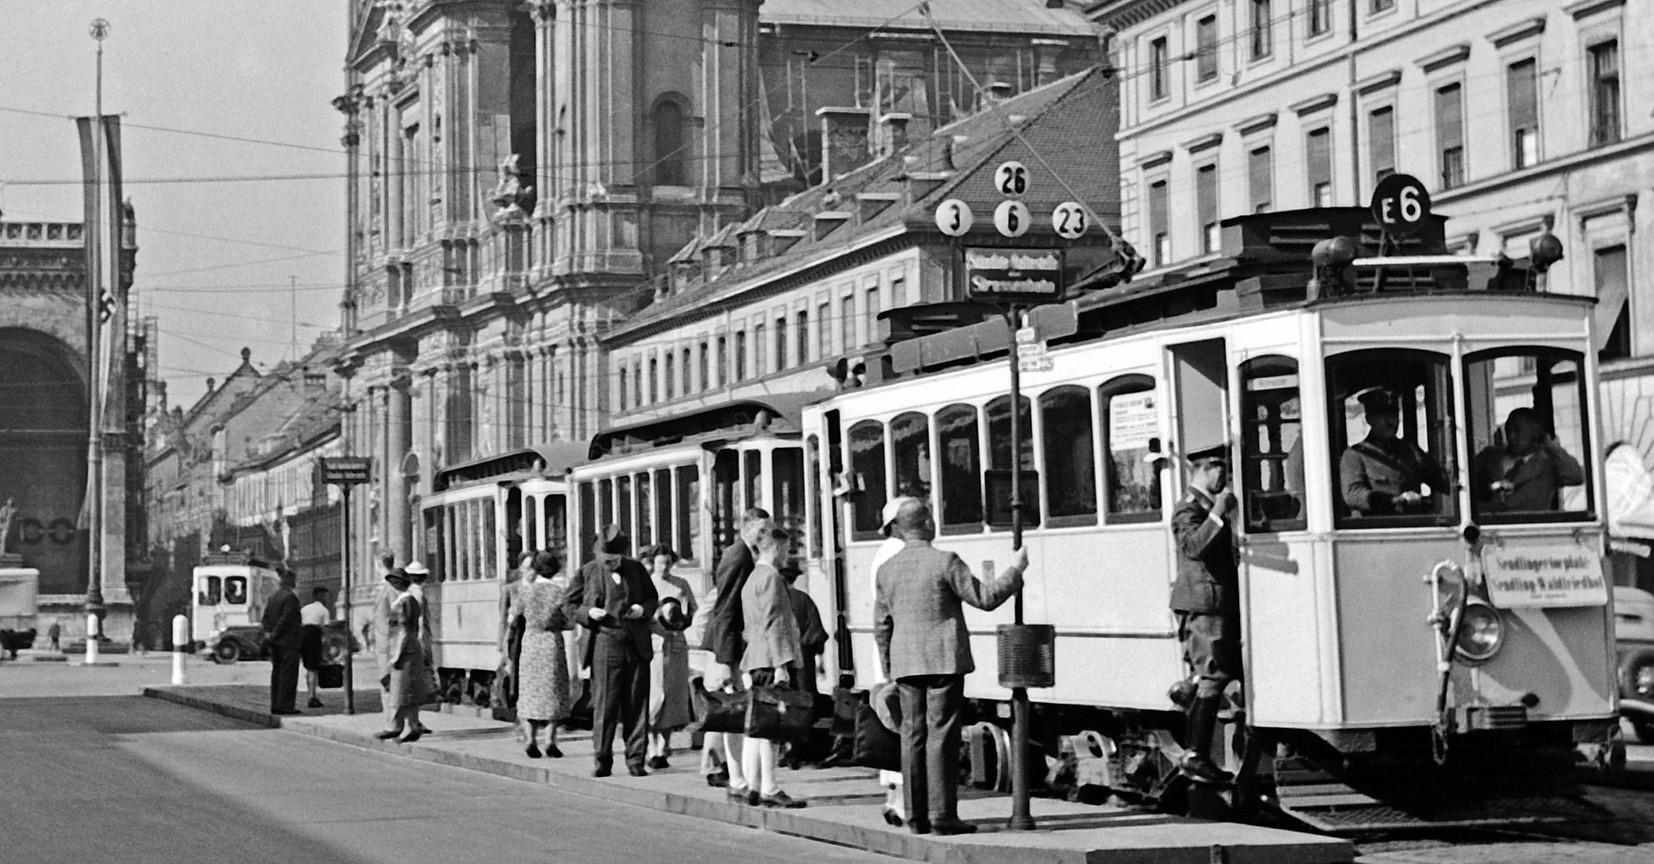 Odeonsplatz, Feldherrnhalle, Theatinerkirche, Munich Allemagne 1937, Imprimé ultérieurement - Photograph de Karl Heinrich Lämmel